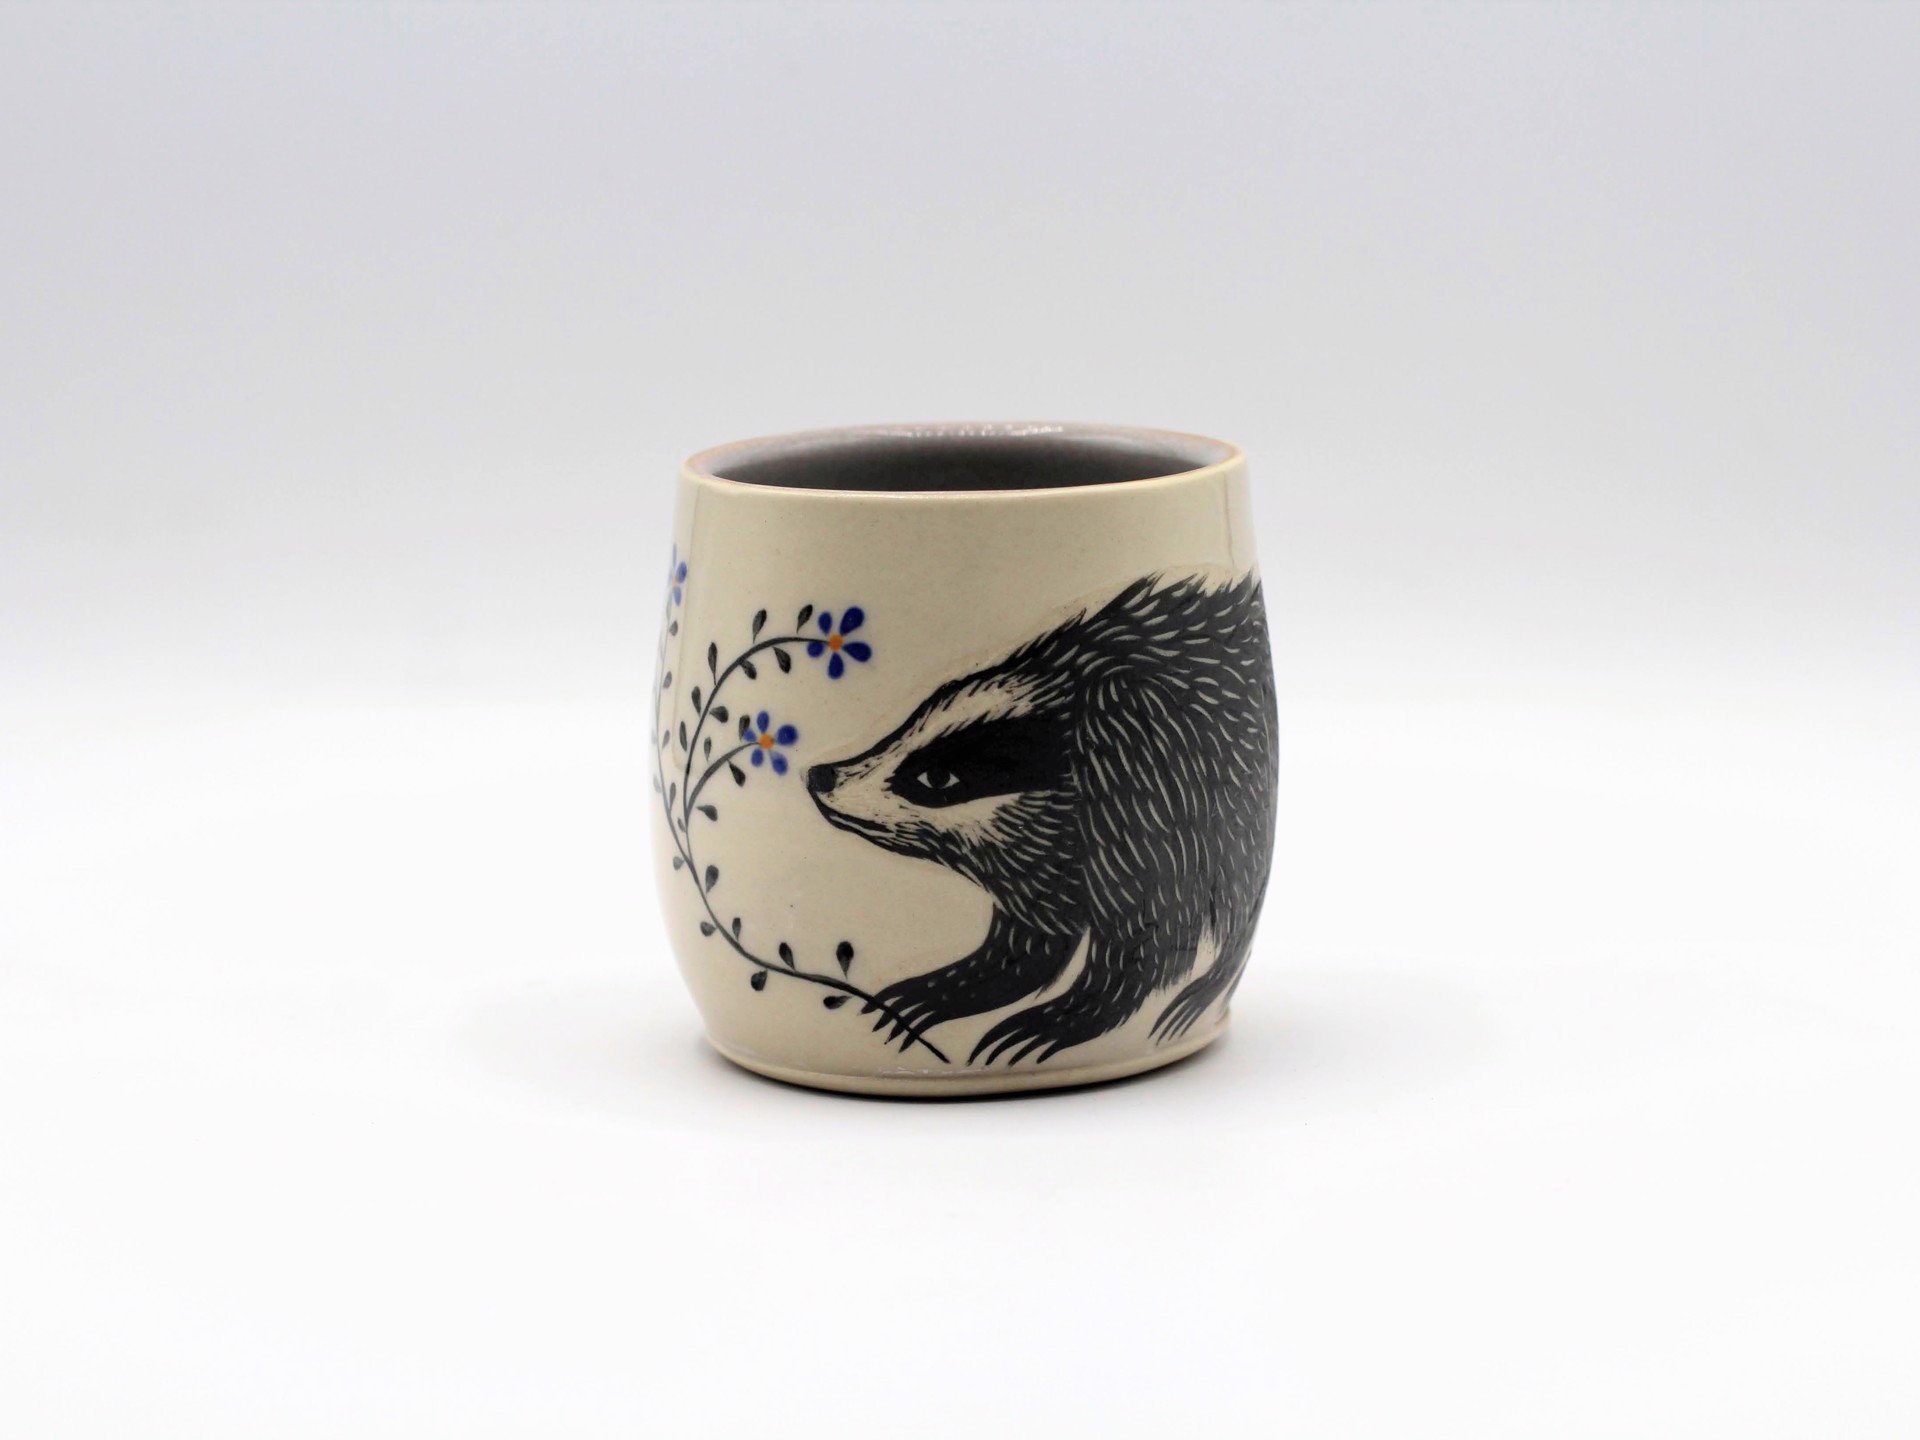 Badger and Flower Mug by Christine Sutton